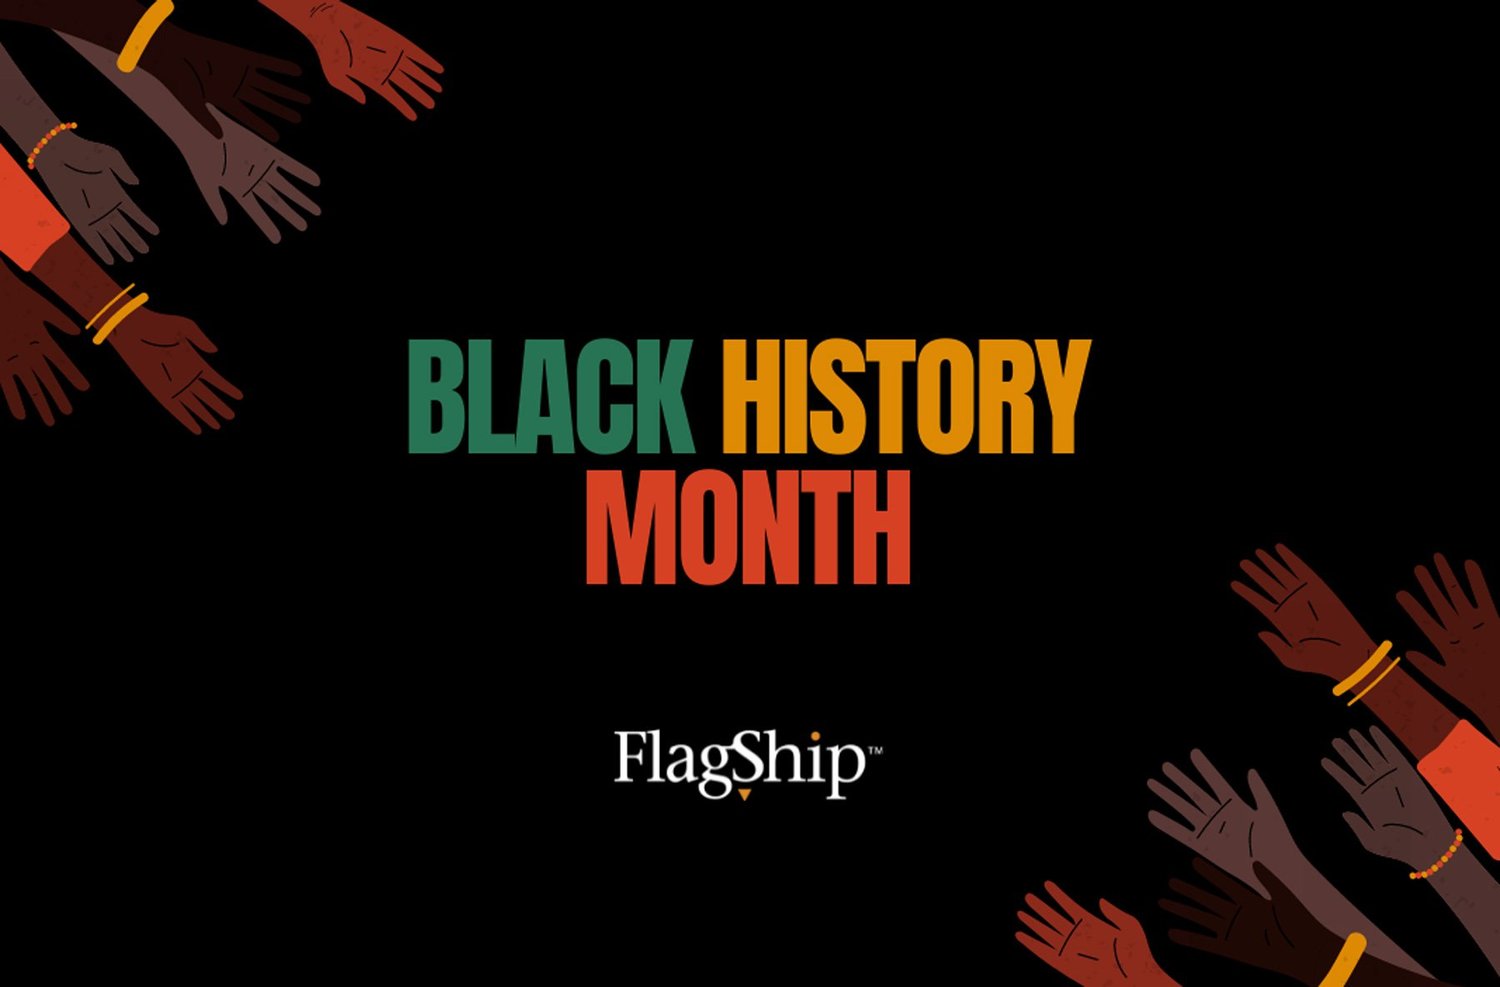 Black History Month: February 2022